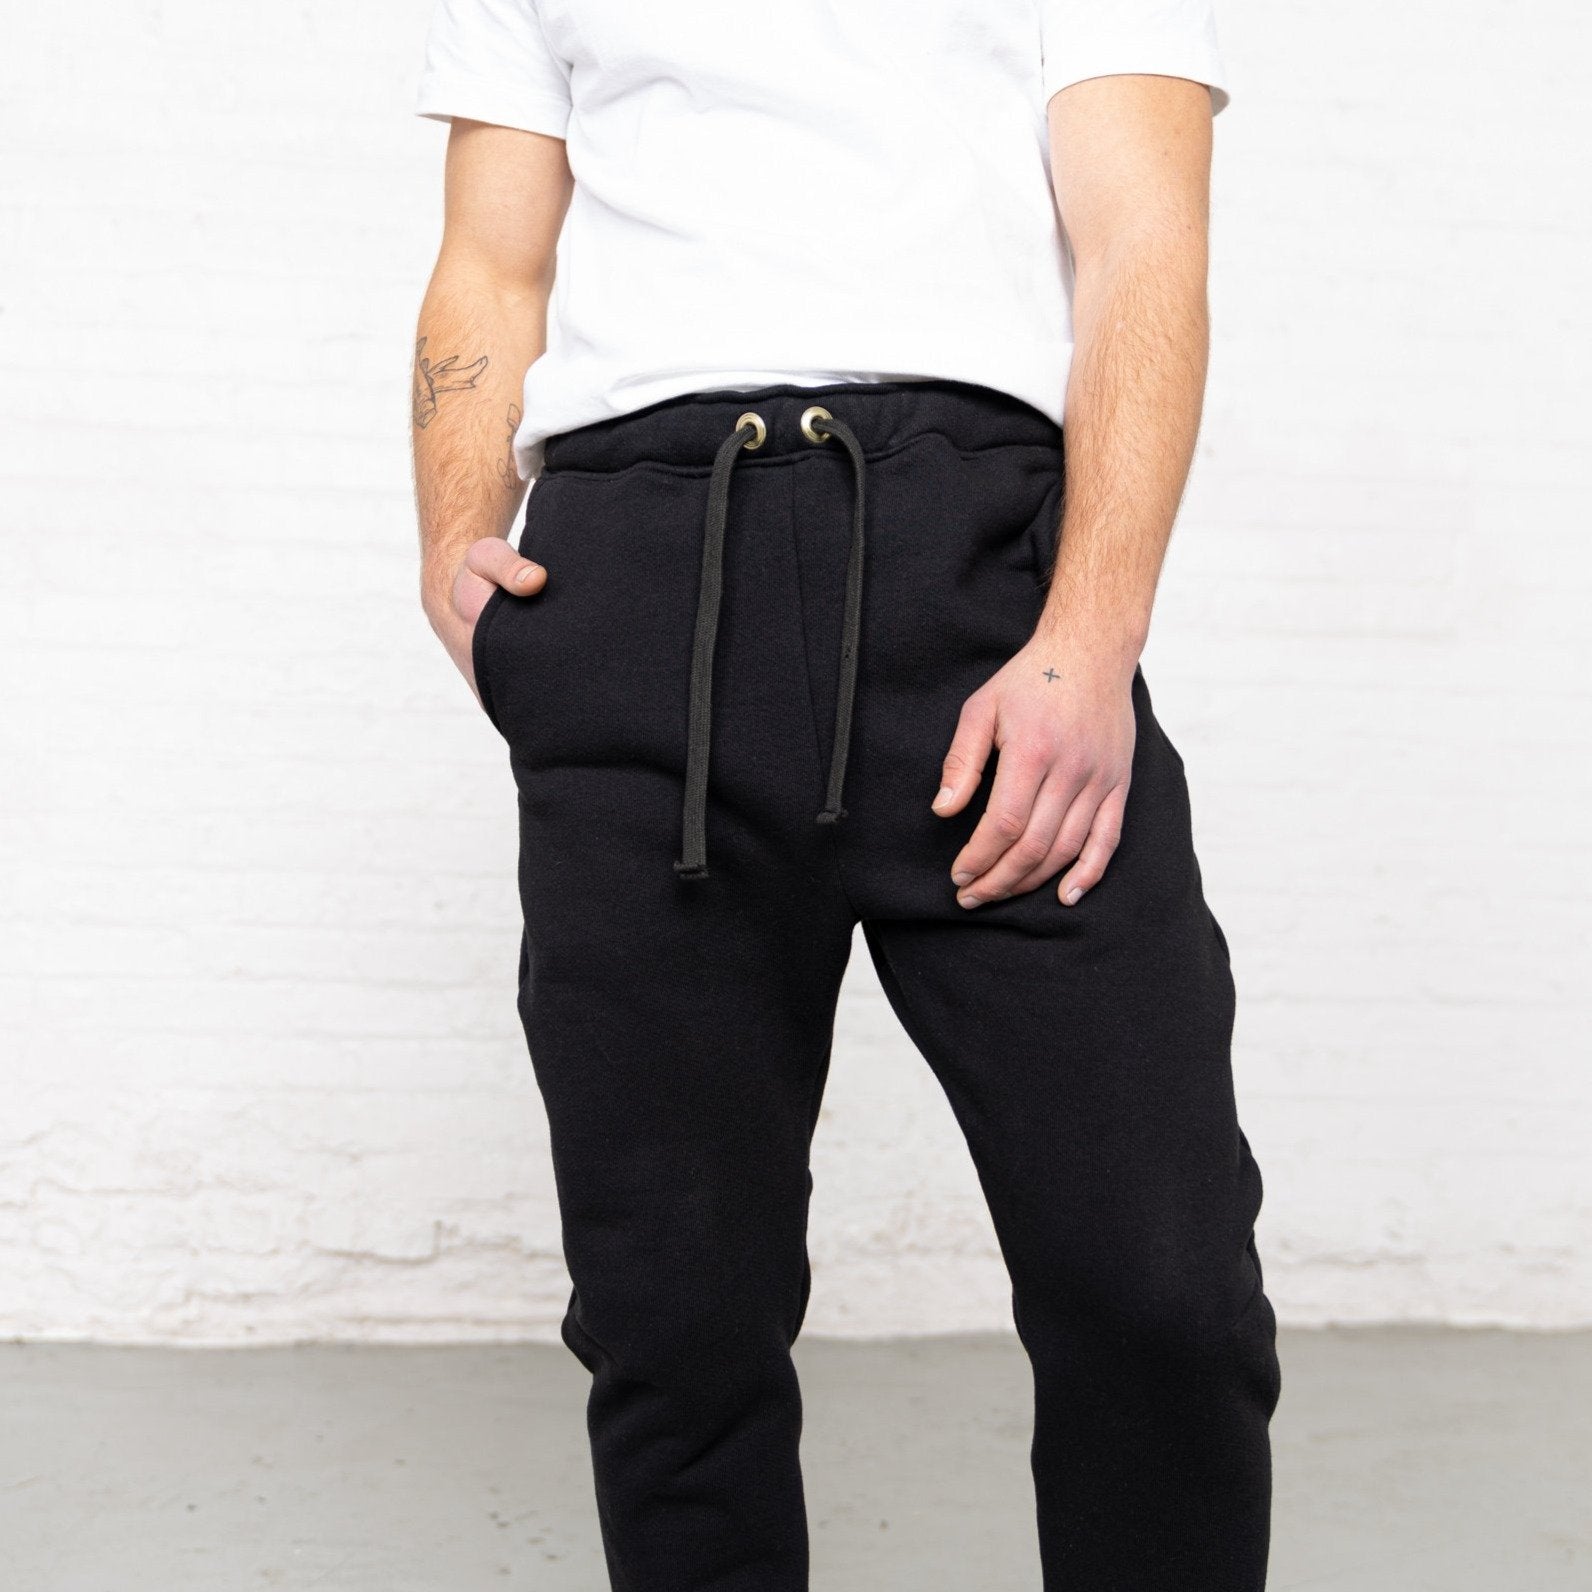 Color:Black 3 Thread Fleece Men's Sweatpants New